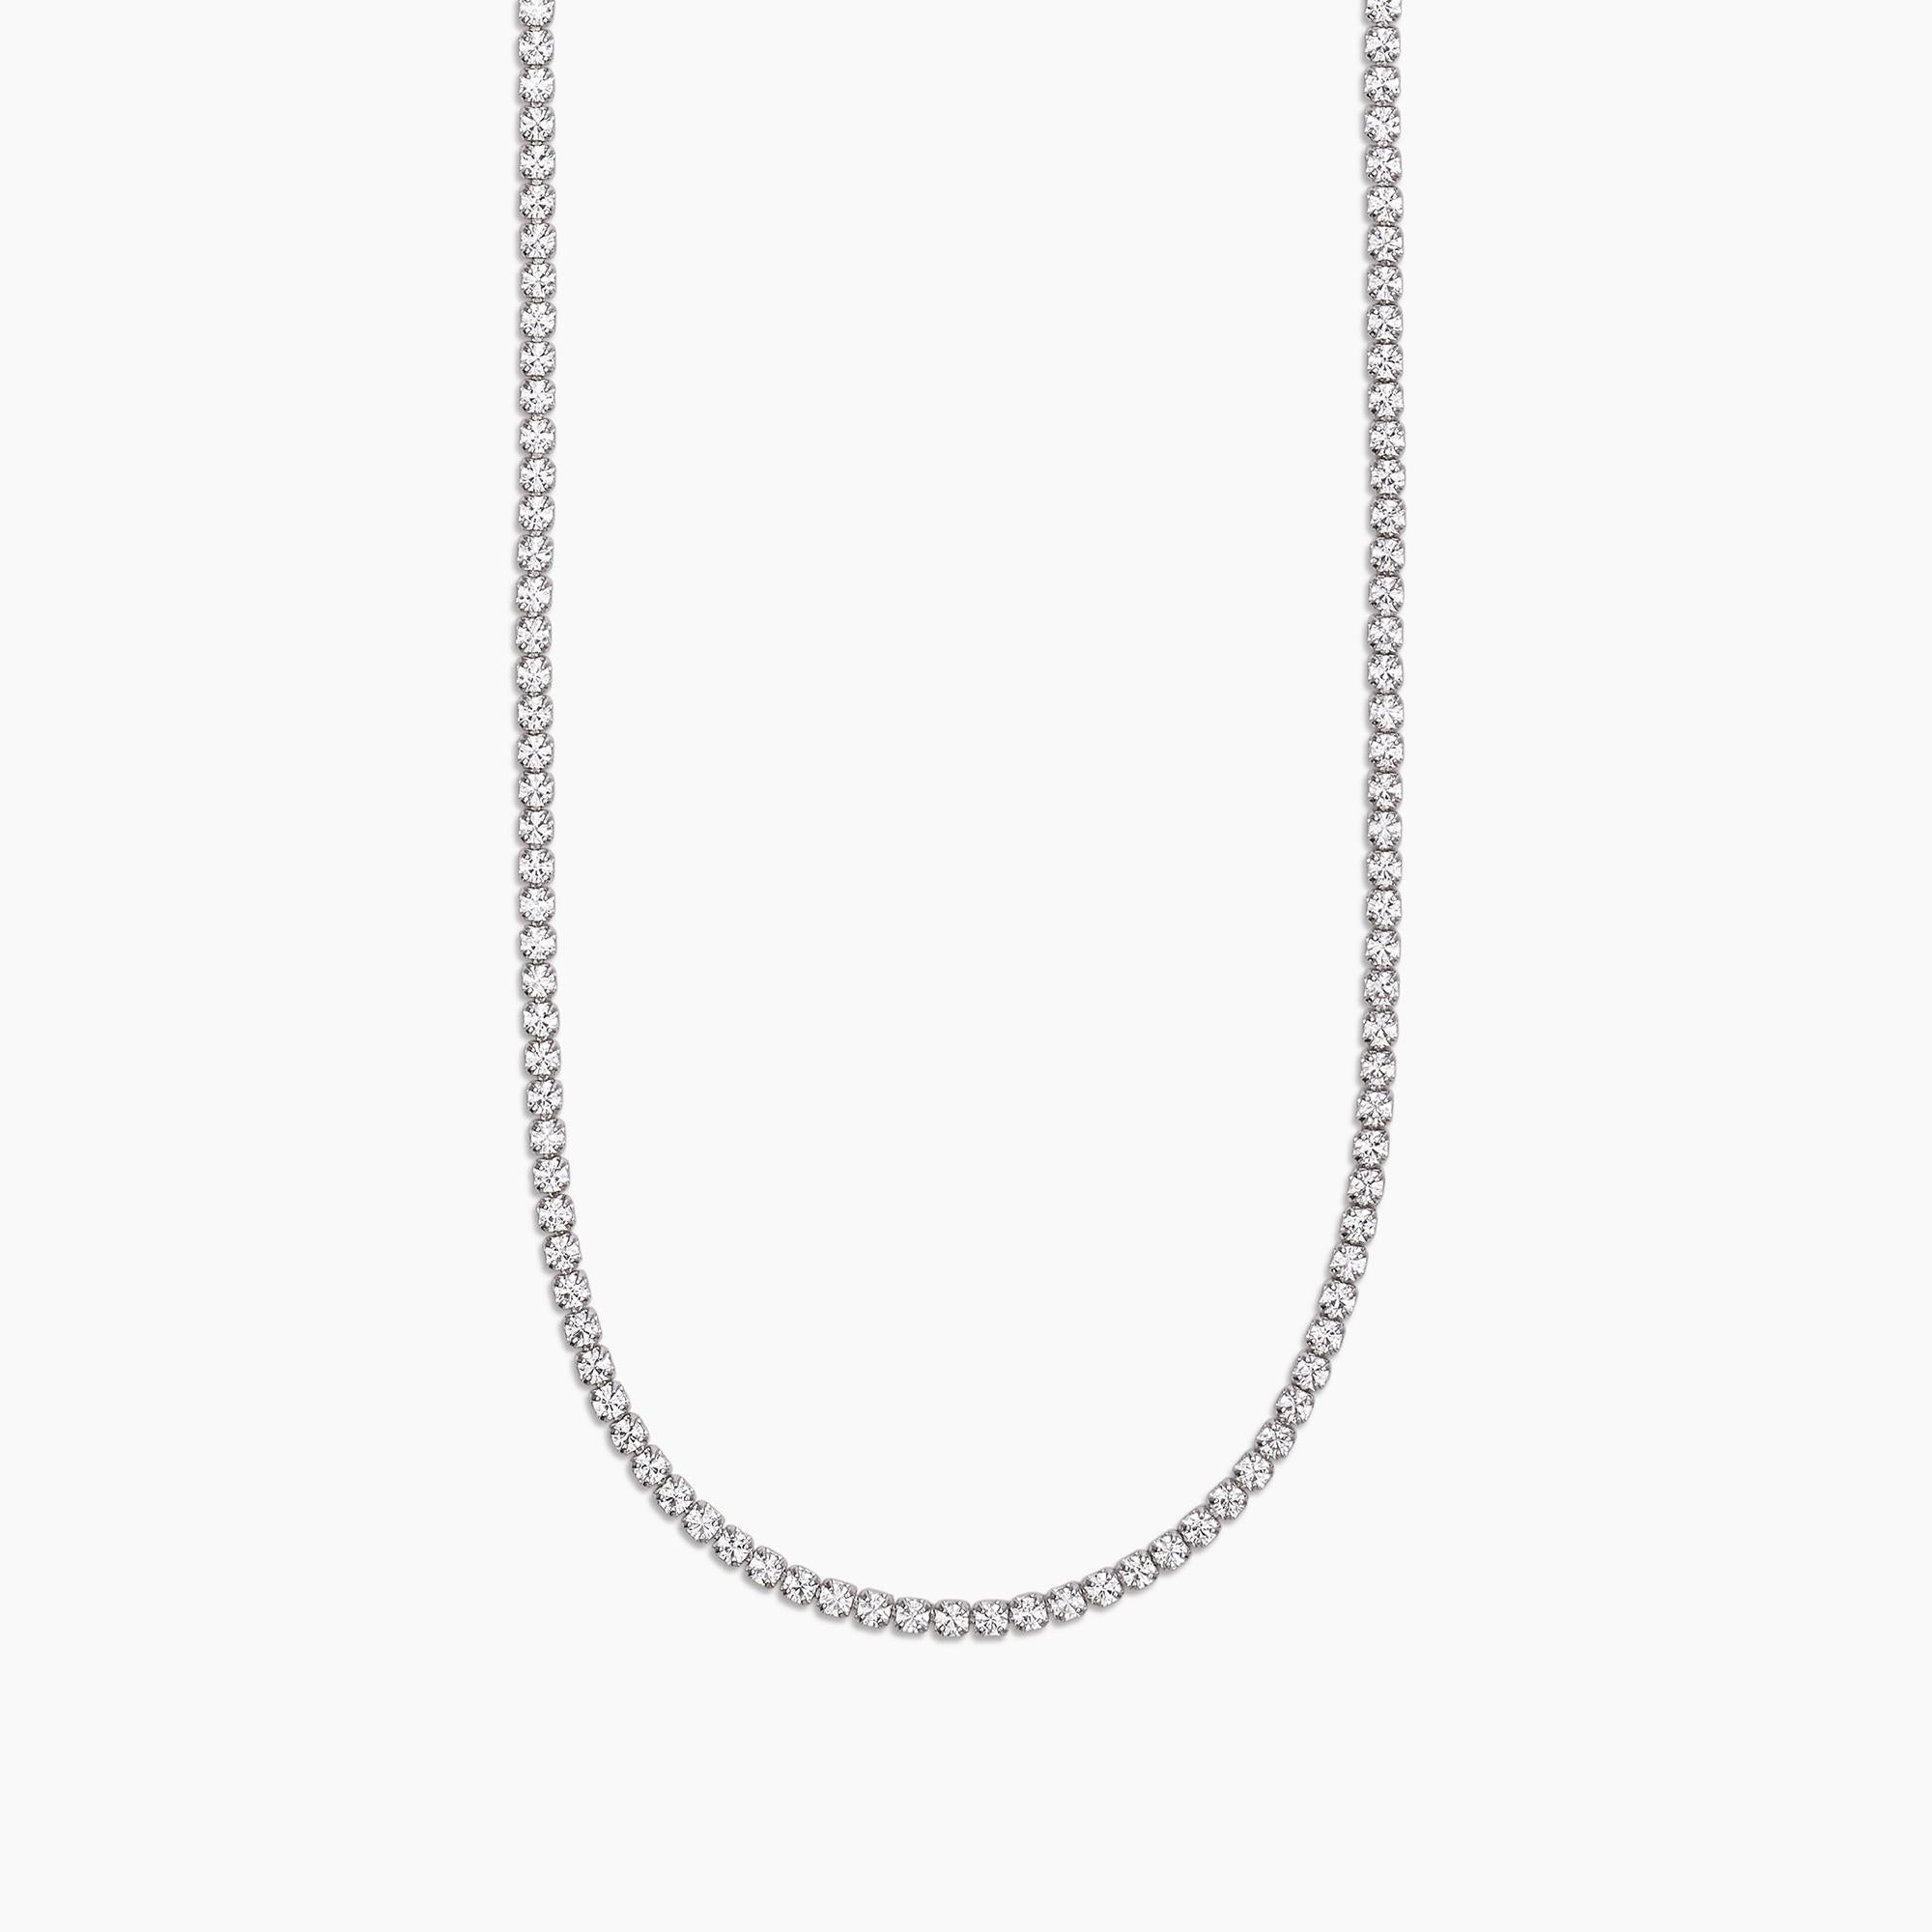 Mabina Man - Tennis necklace with white zircons MINI TENNIS - 553577